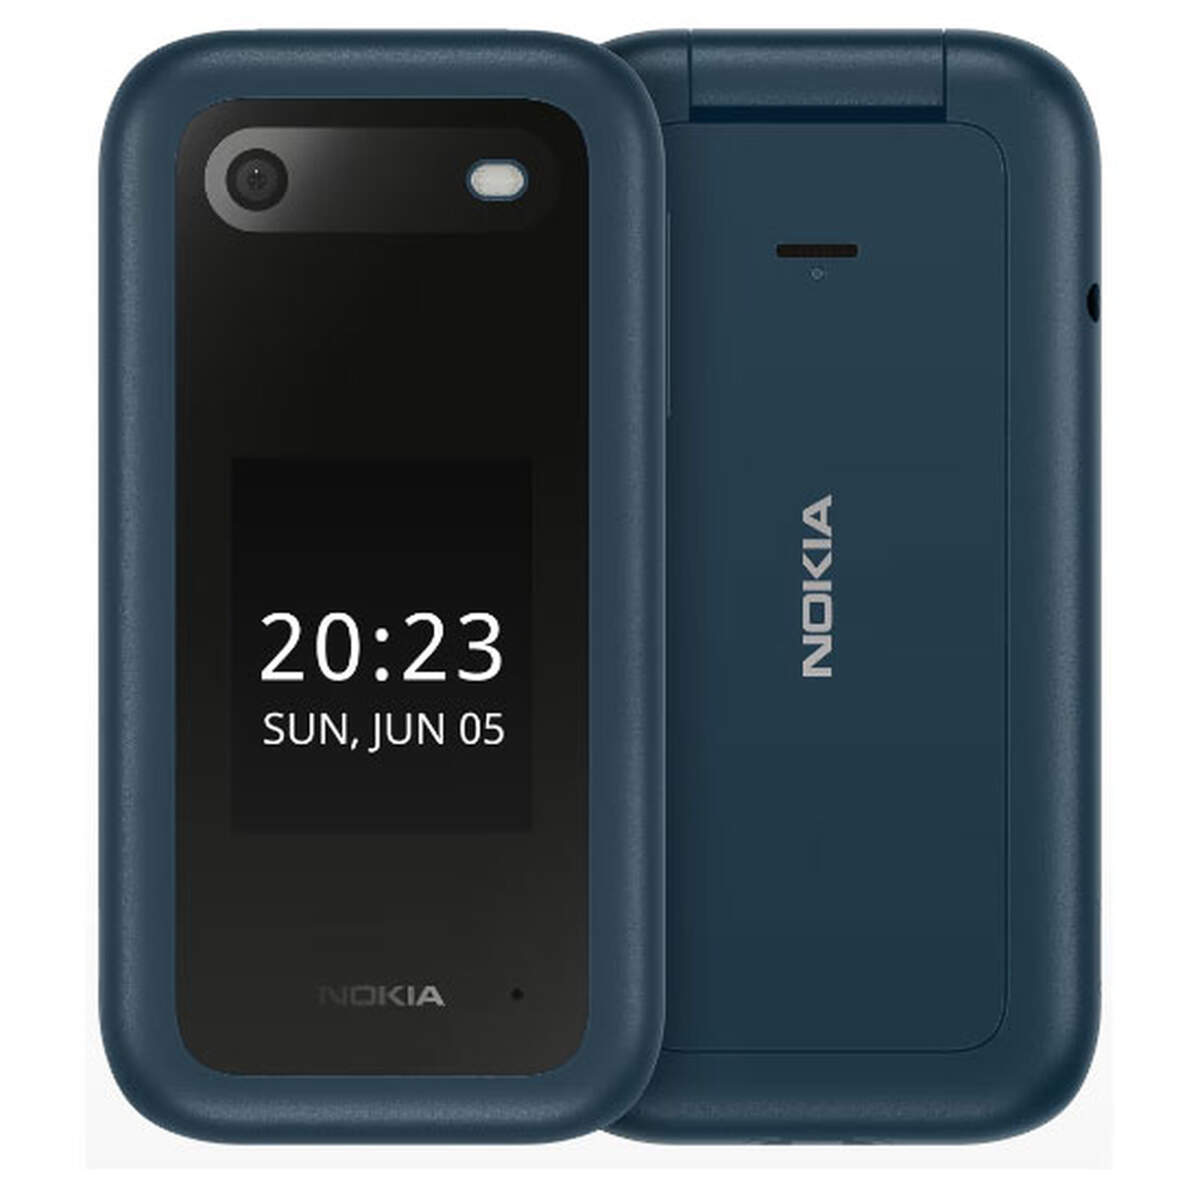 Nokia 2660 Flip In Ecuador